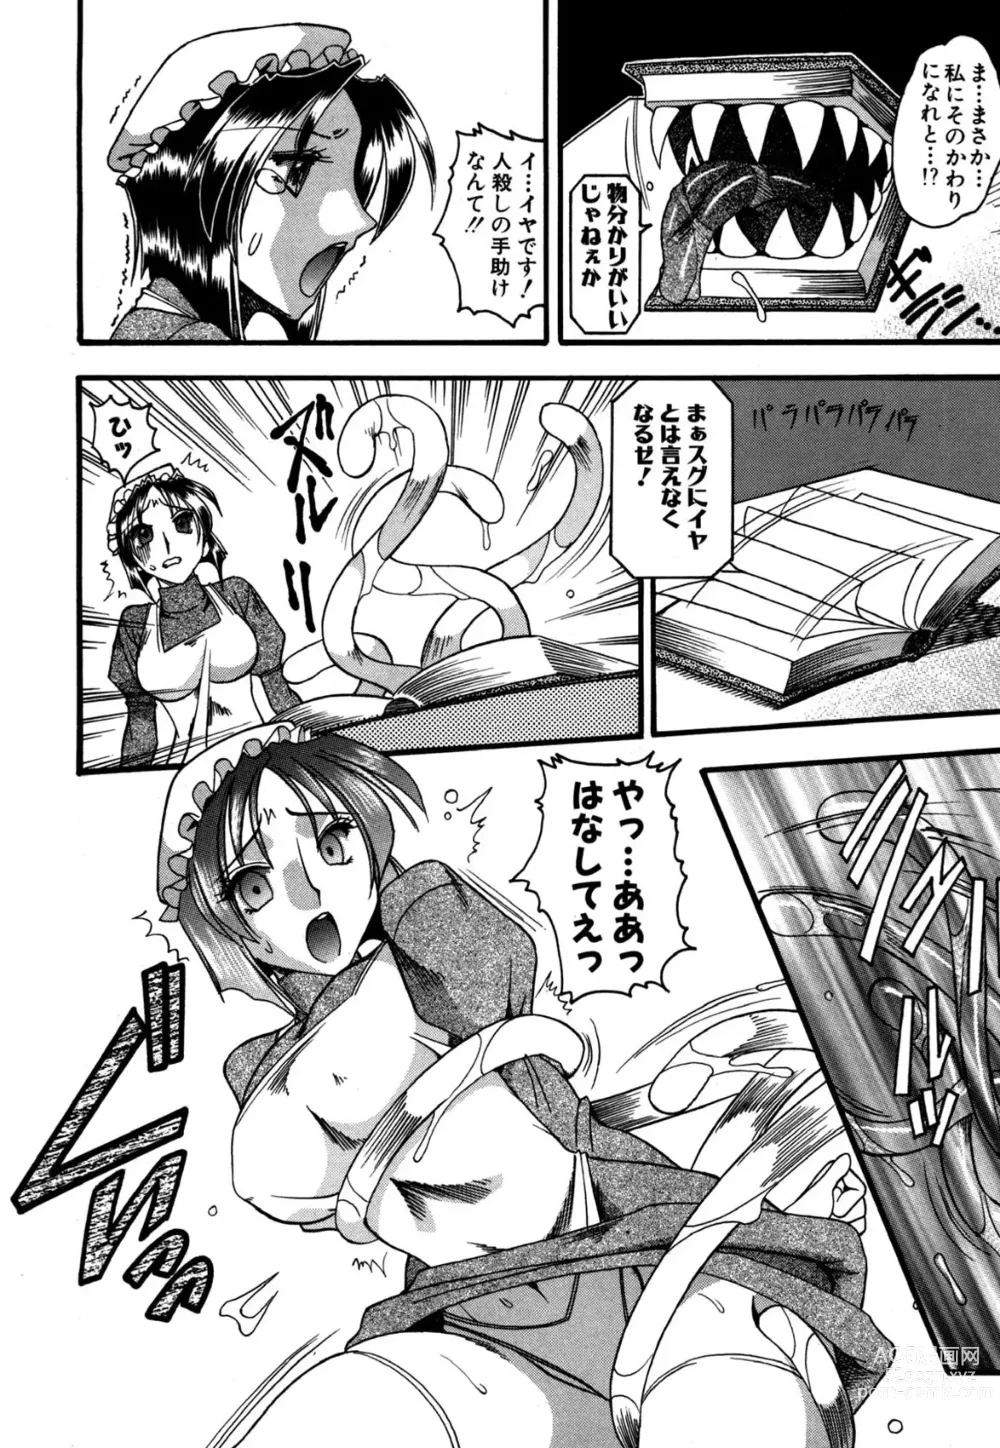 Page 13 of manga Mizugism